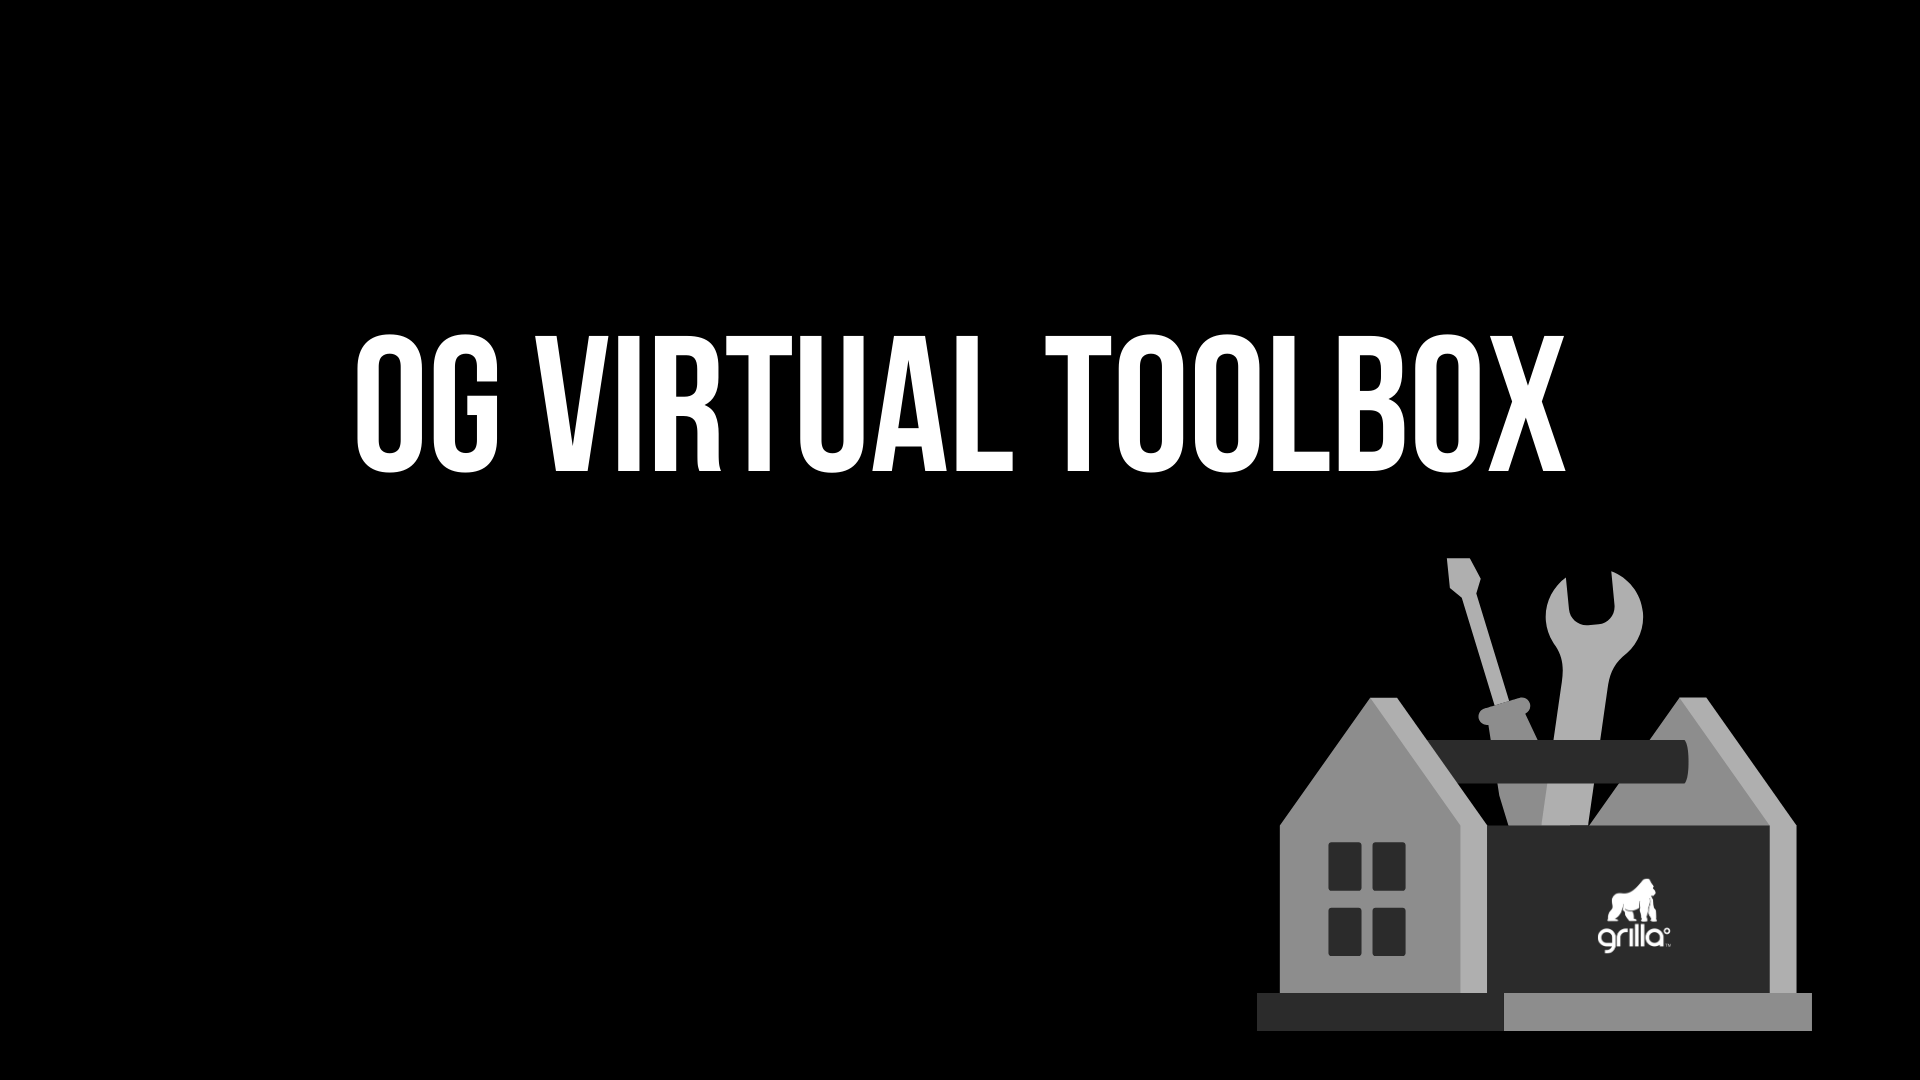 Og virtual toolbox